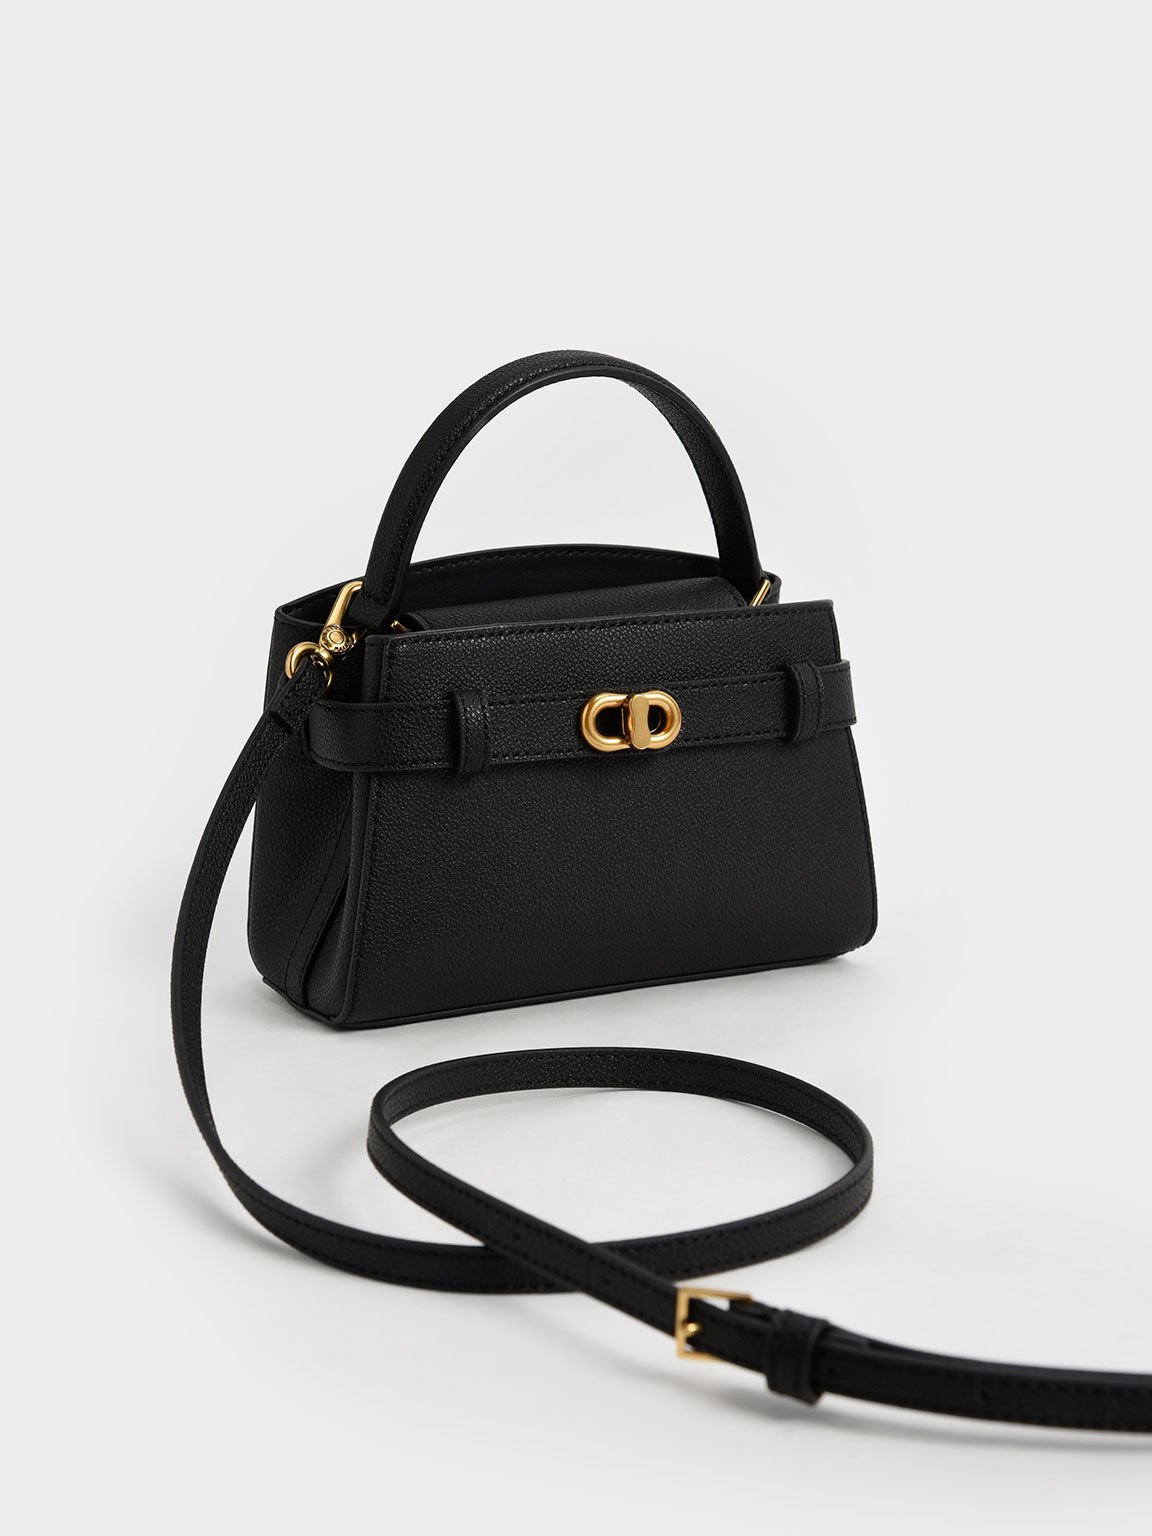 Aubrielle 小型手提包, 黑色, hi-res